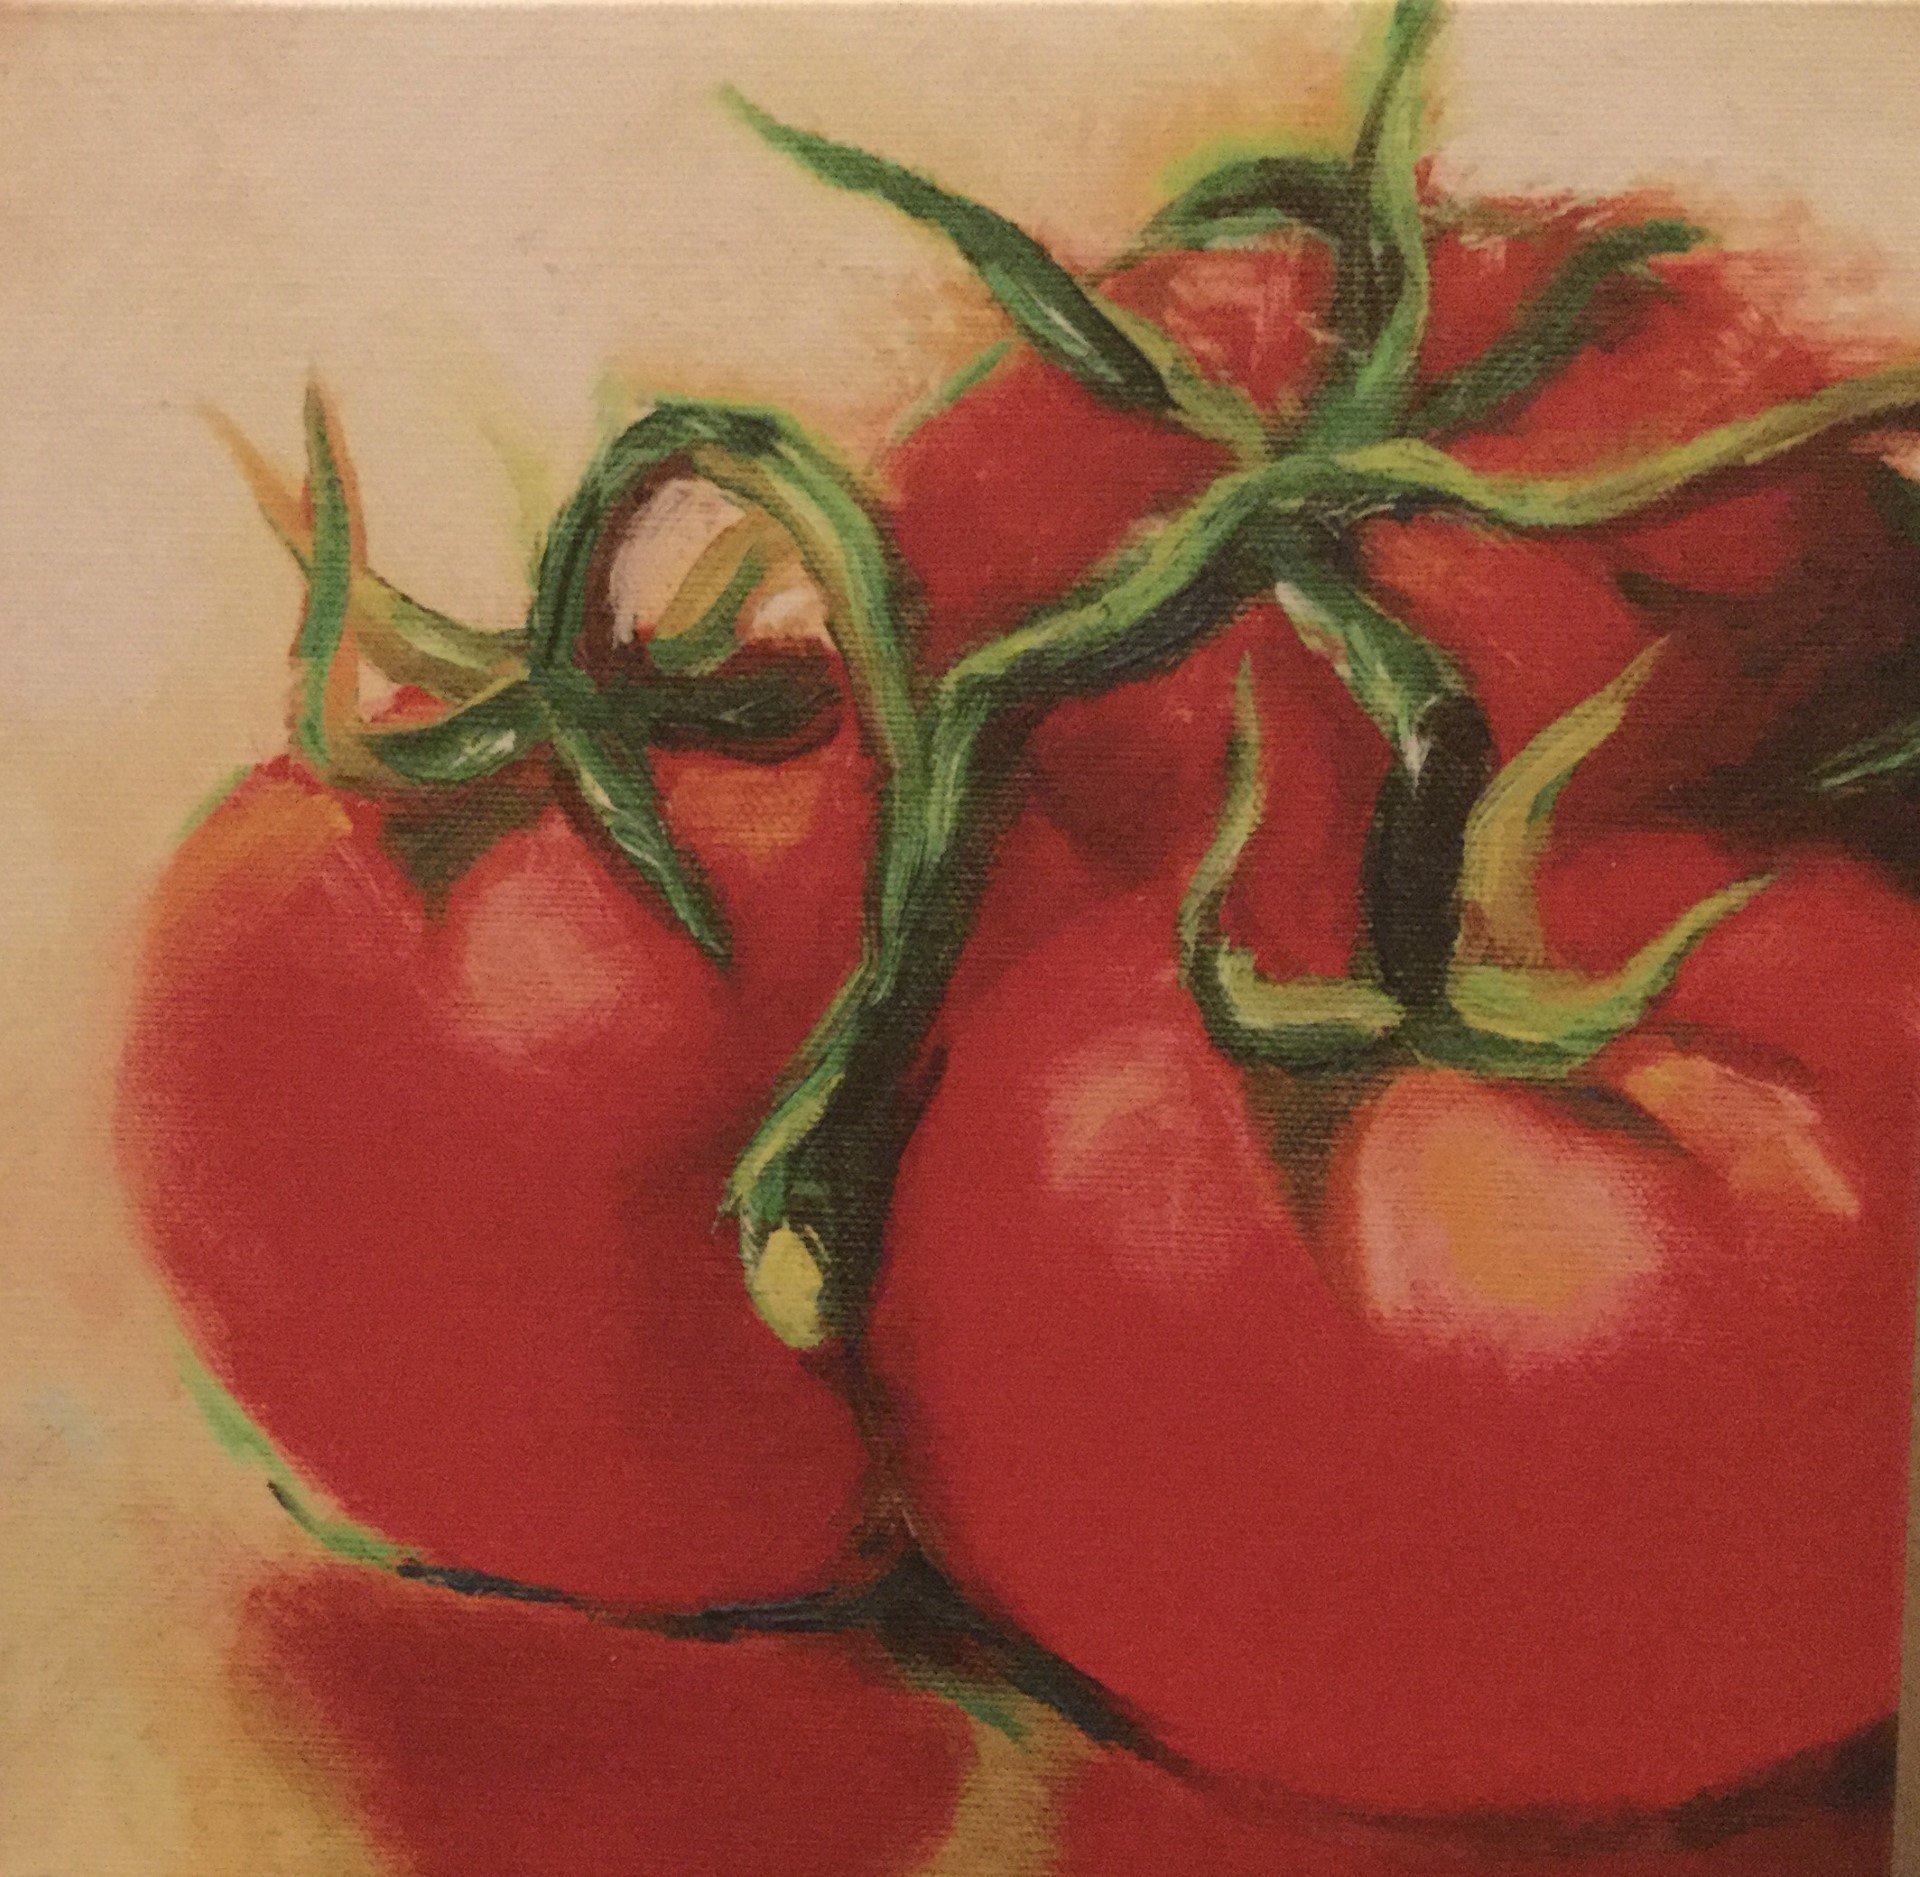 Saucy Tomatoes.jpg